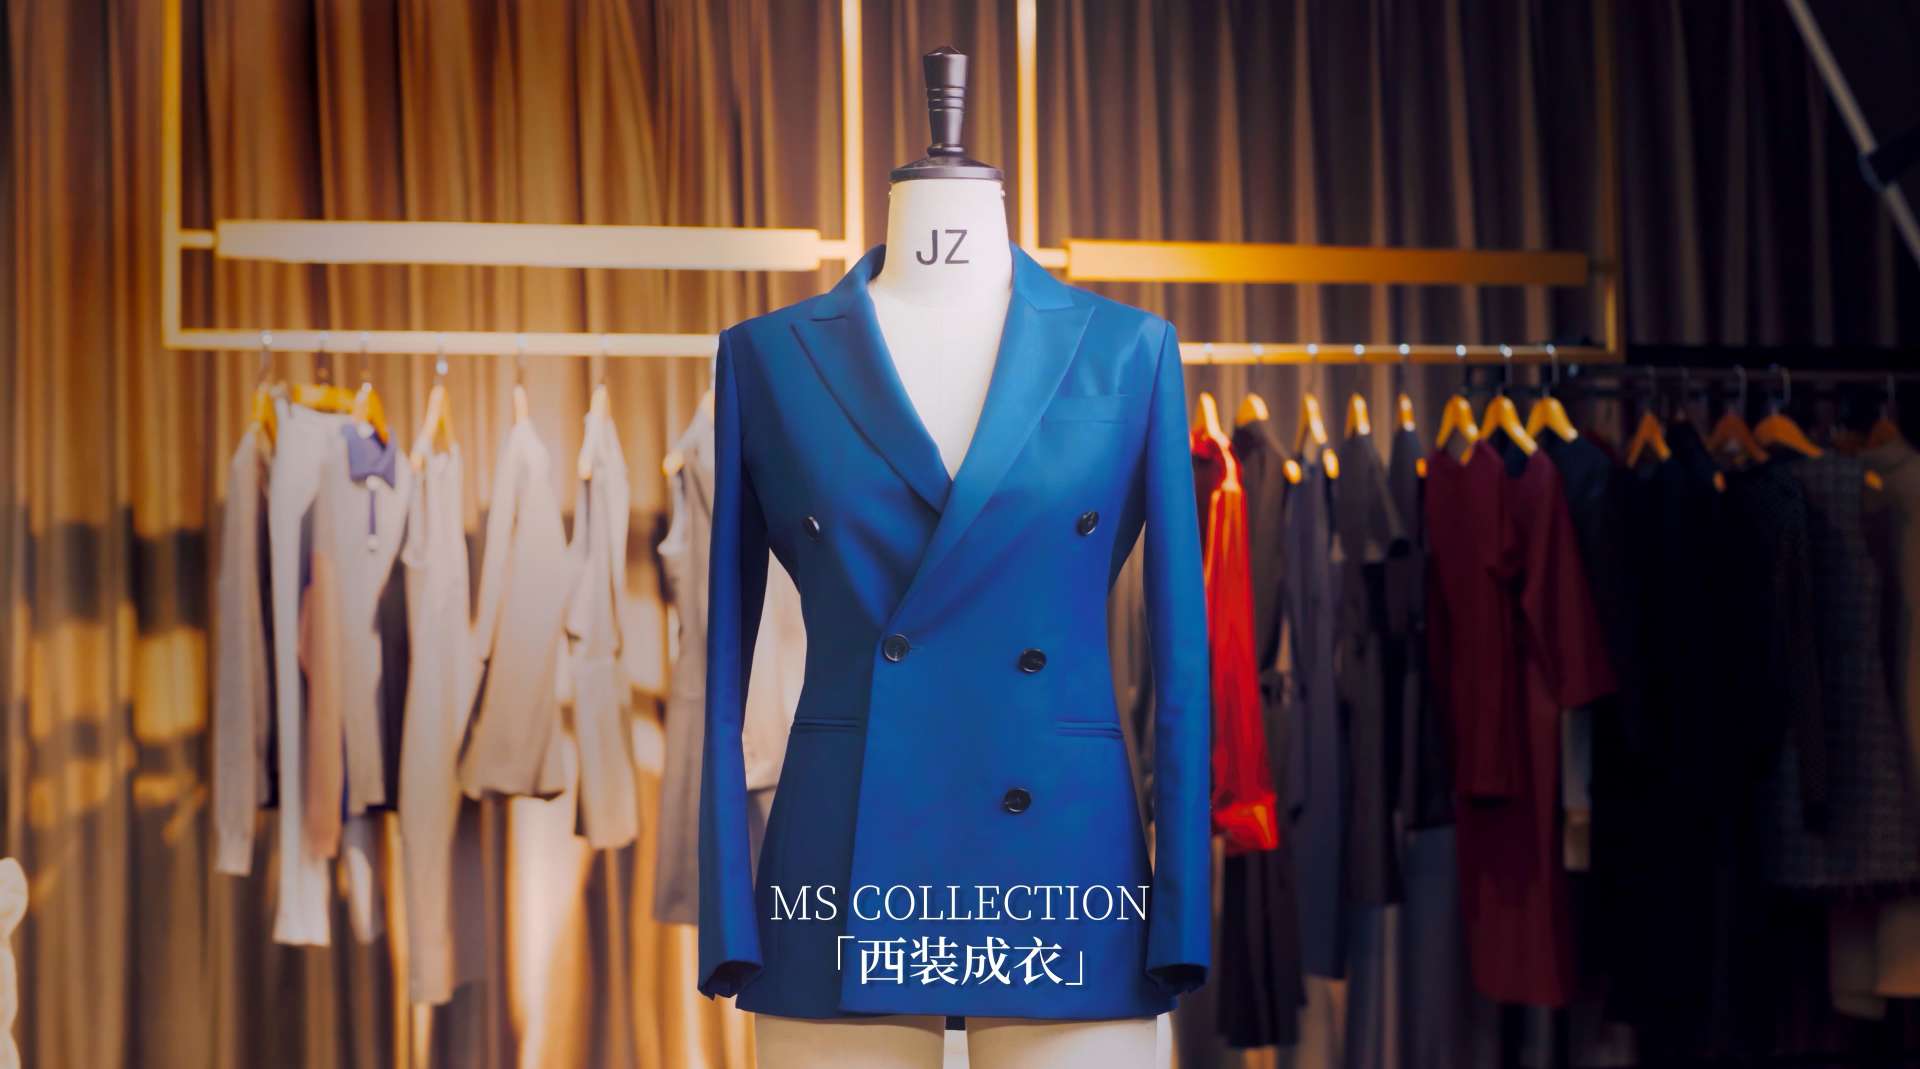 「MS COLLECTION」 服装品牌 面料篇